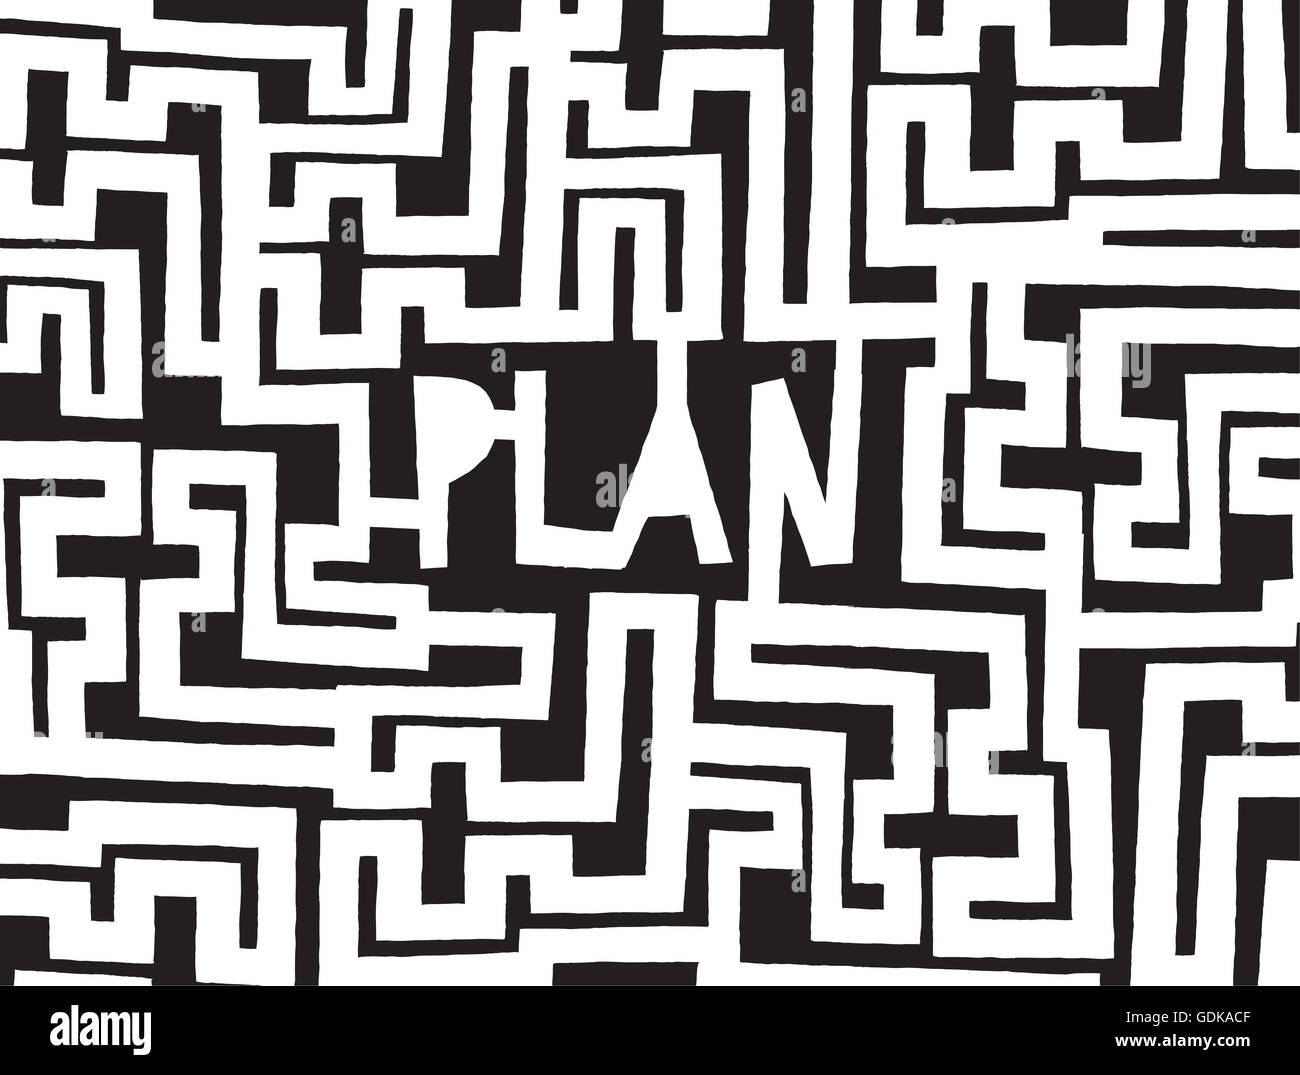 Cartoon illustration of complex maze or plan Stock Photo